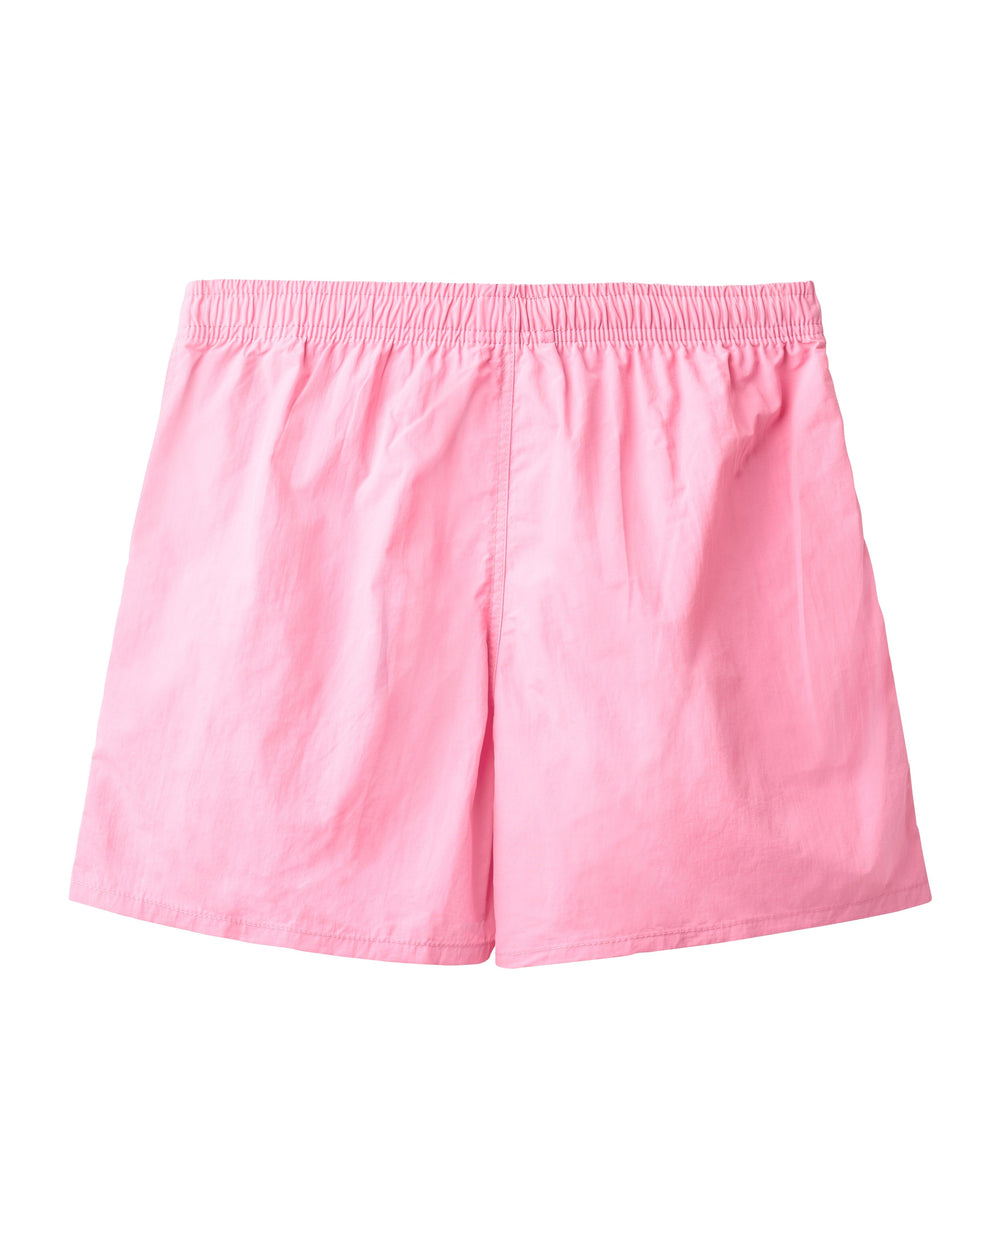 H2O - Leisure Woman Swim Shorts - 2025 Sachet Pink Shorts 